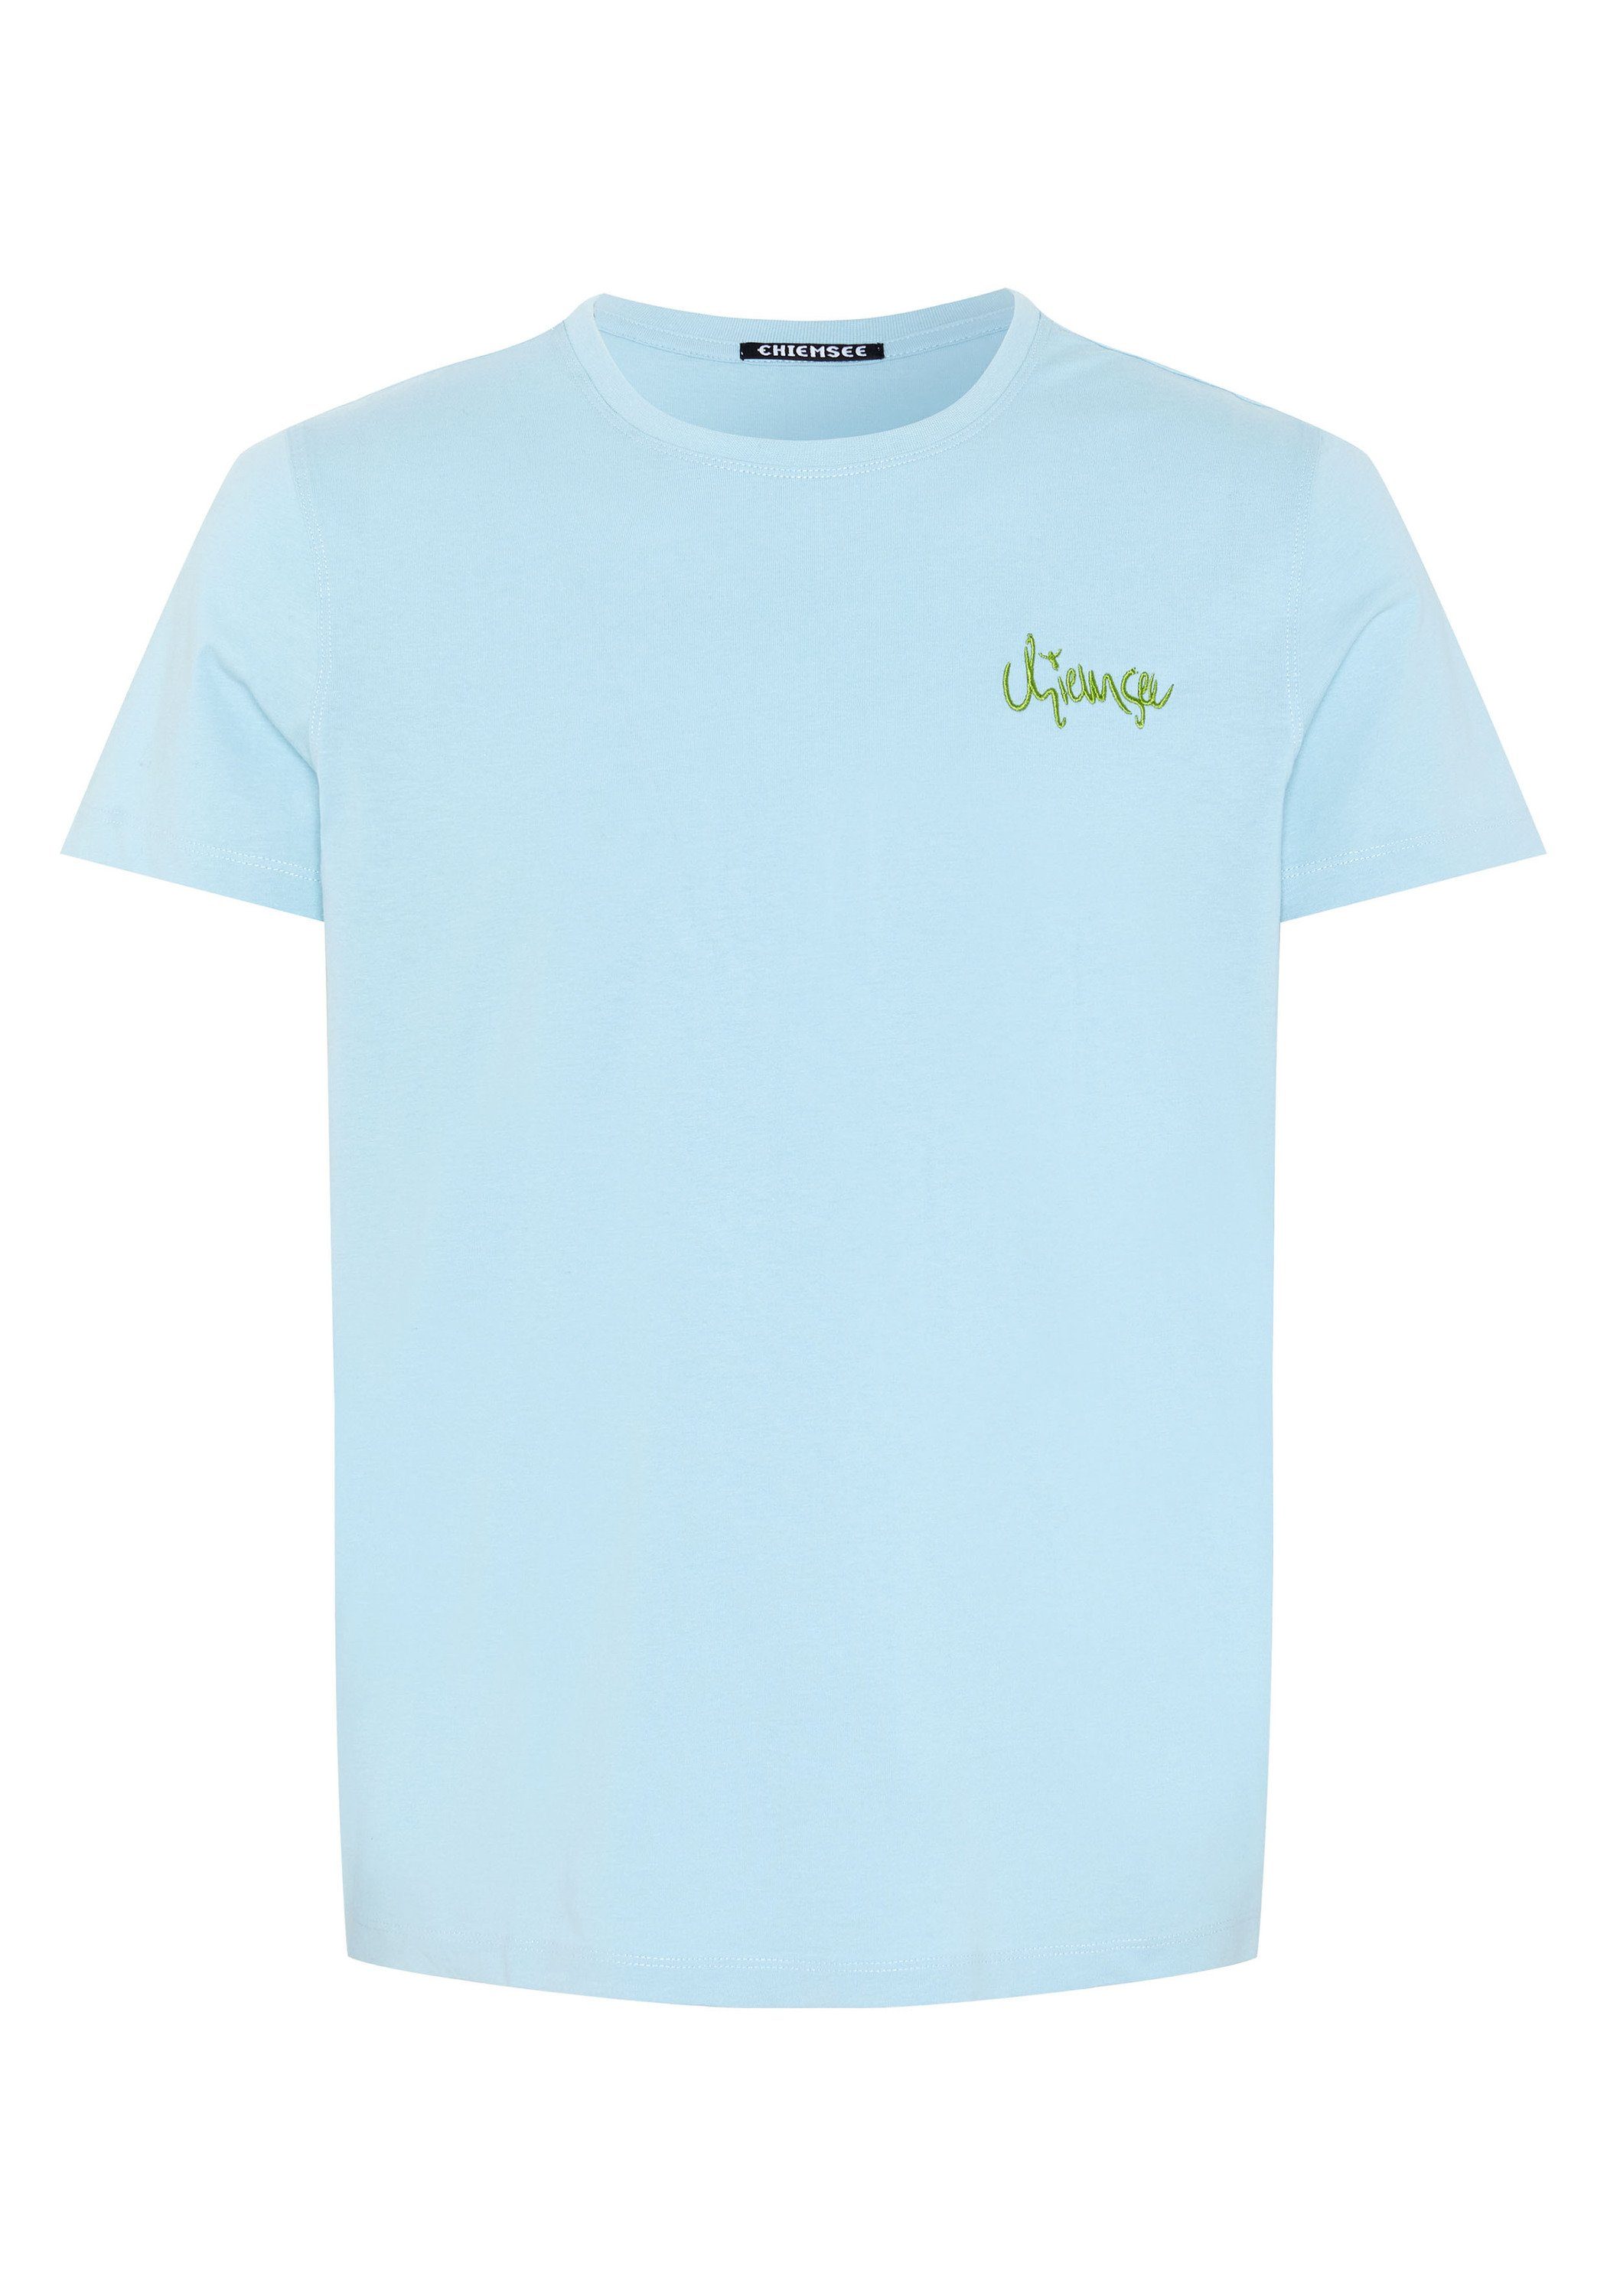 und Chiemsee Print-Shirt Blattmotiv 1 Schriftzug Blue mit T-Shirt Sky